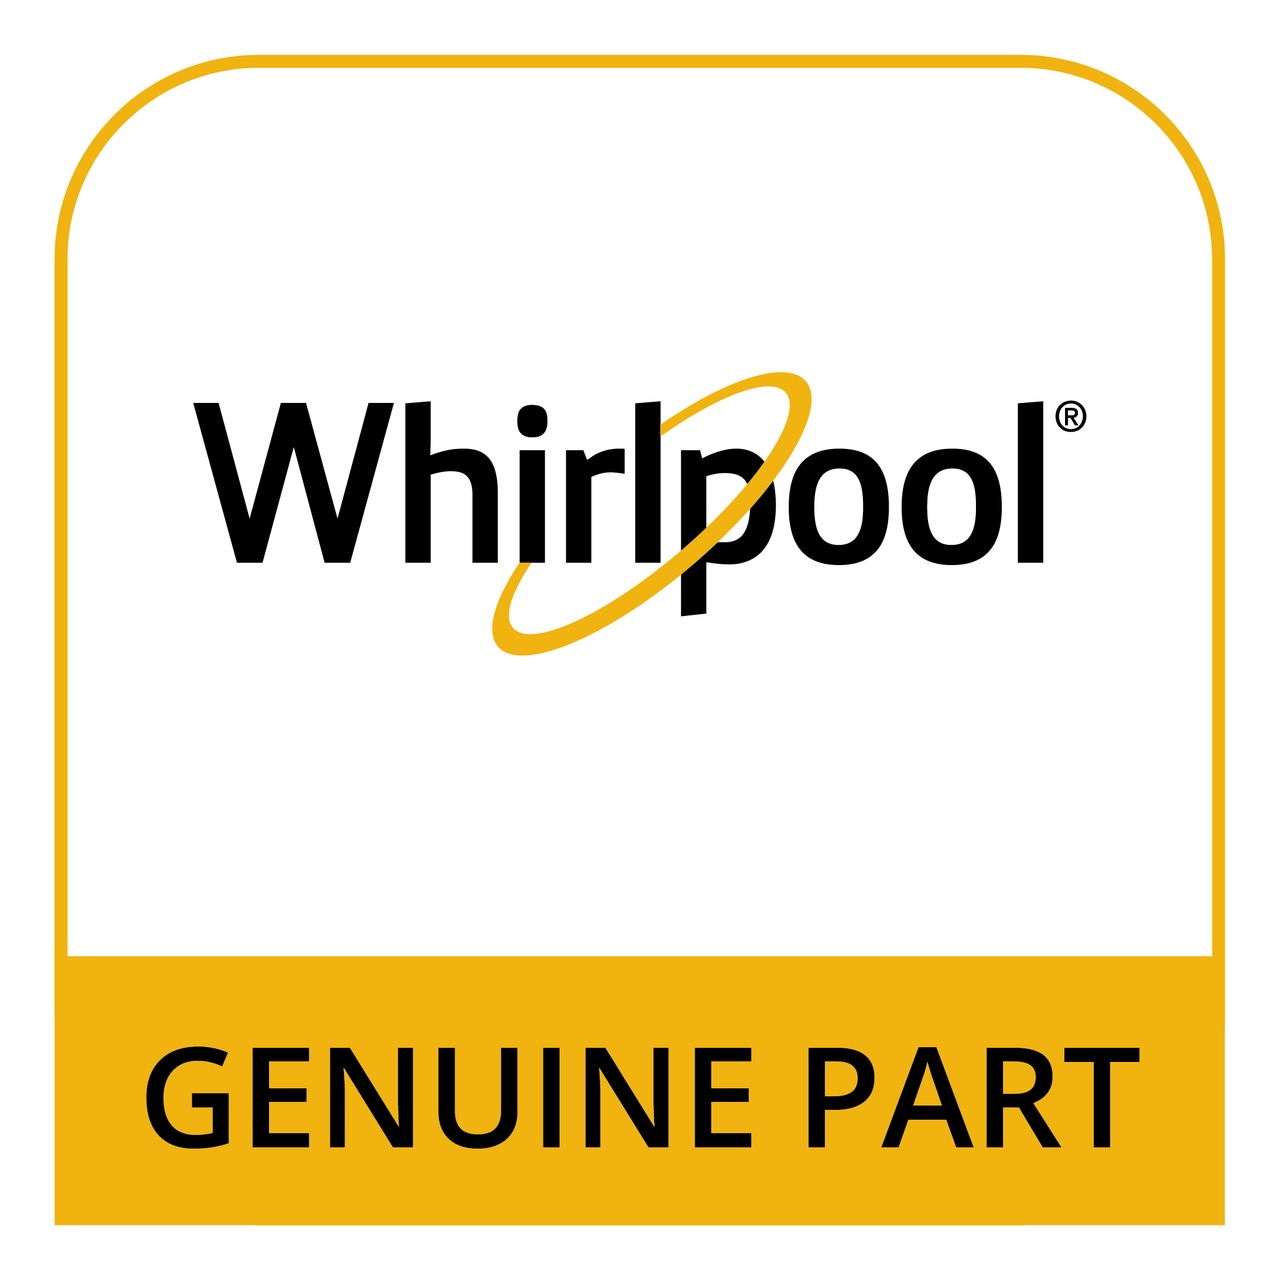 Whirlpool WP7737P245-60 - Range Top Burner Control Knob, Chrome - Genuine Part